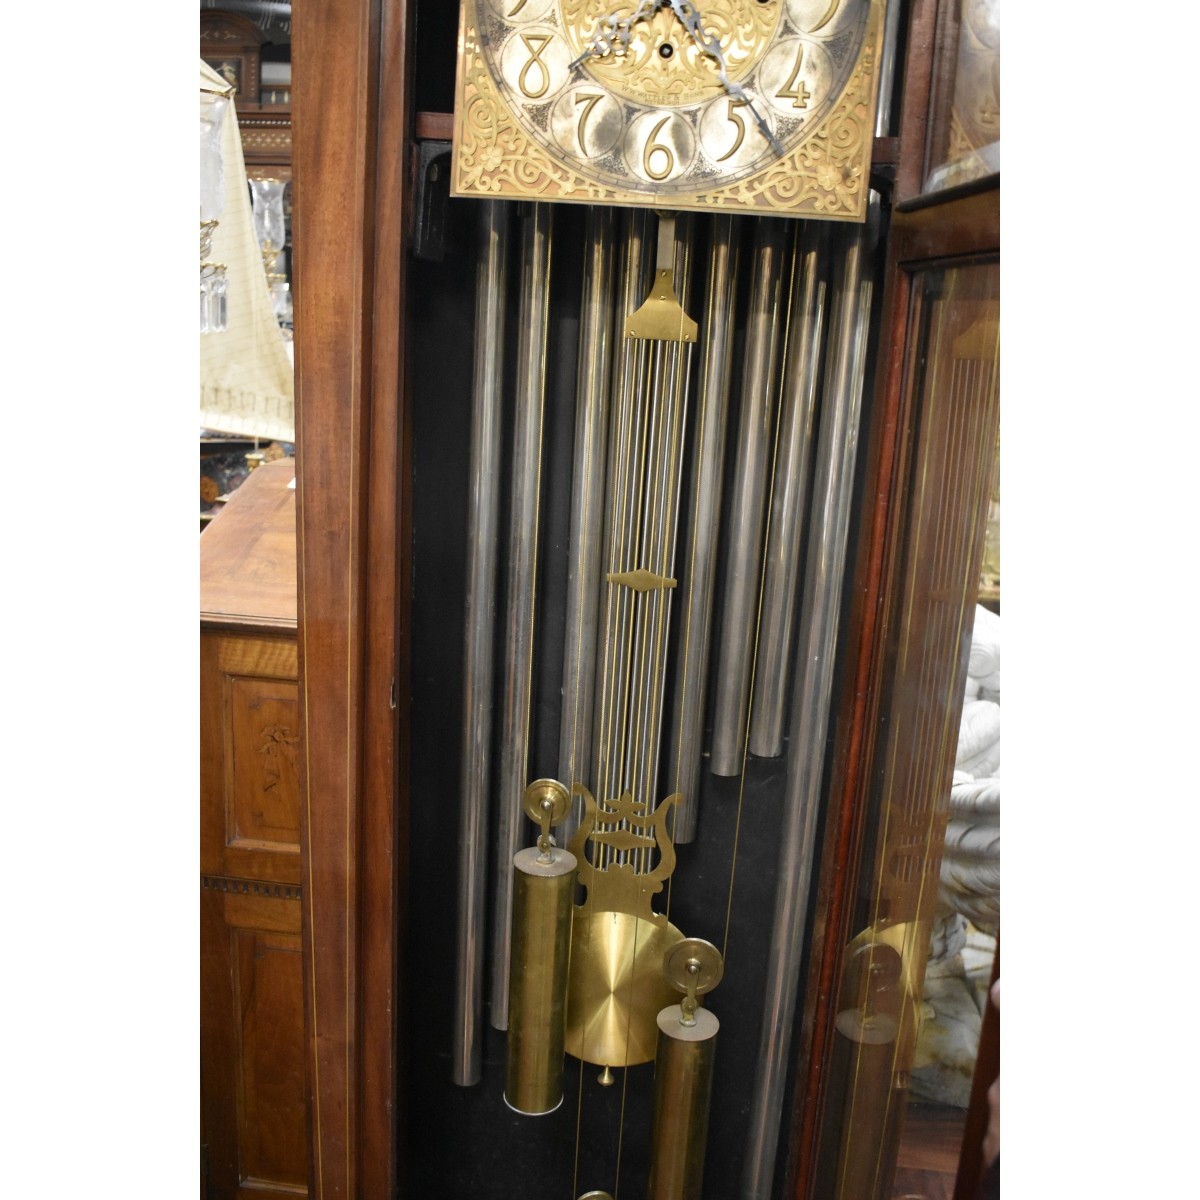 Antique W.W. Wattles & Sons Grandfather Clock